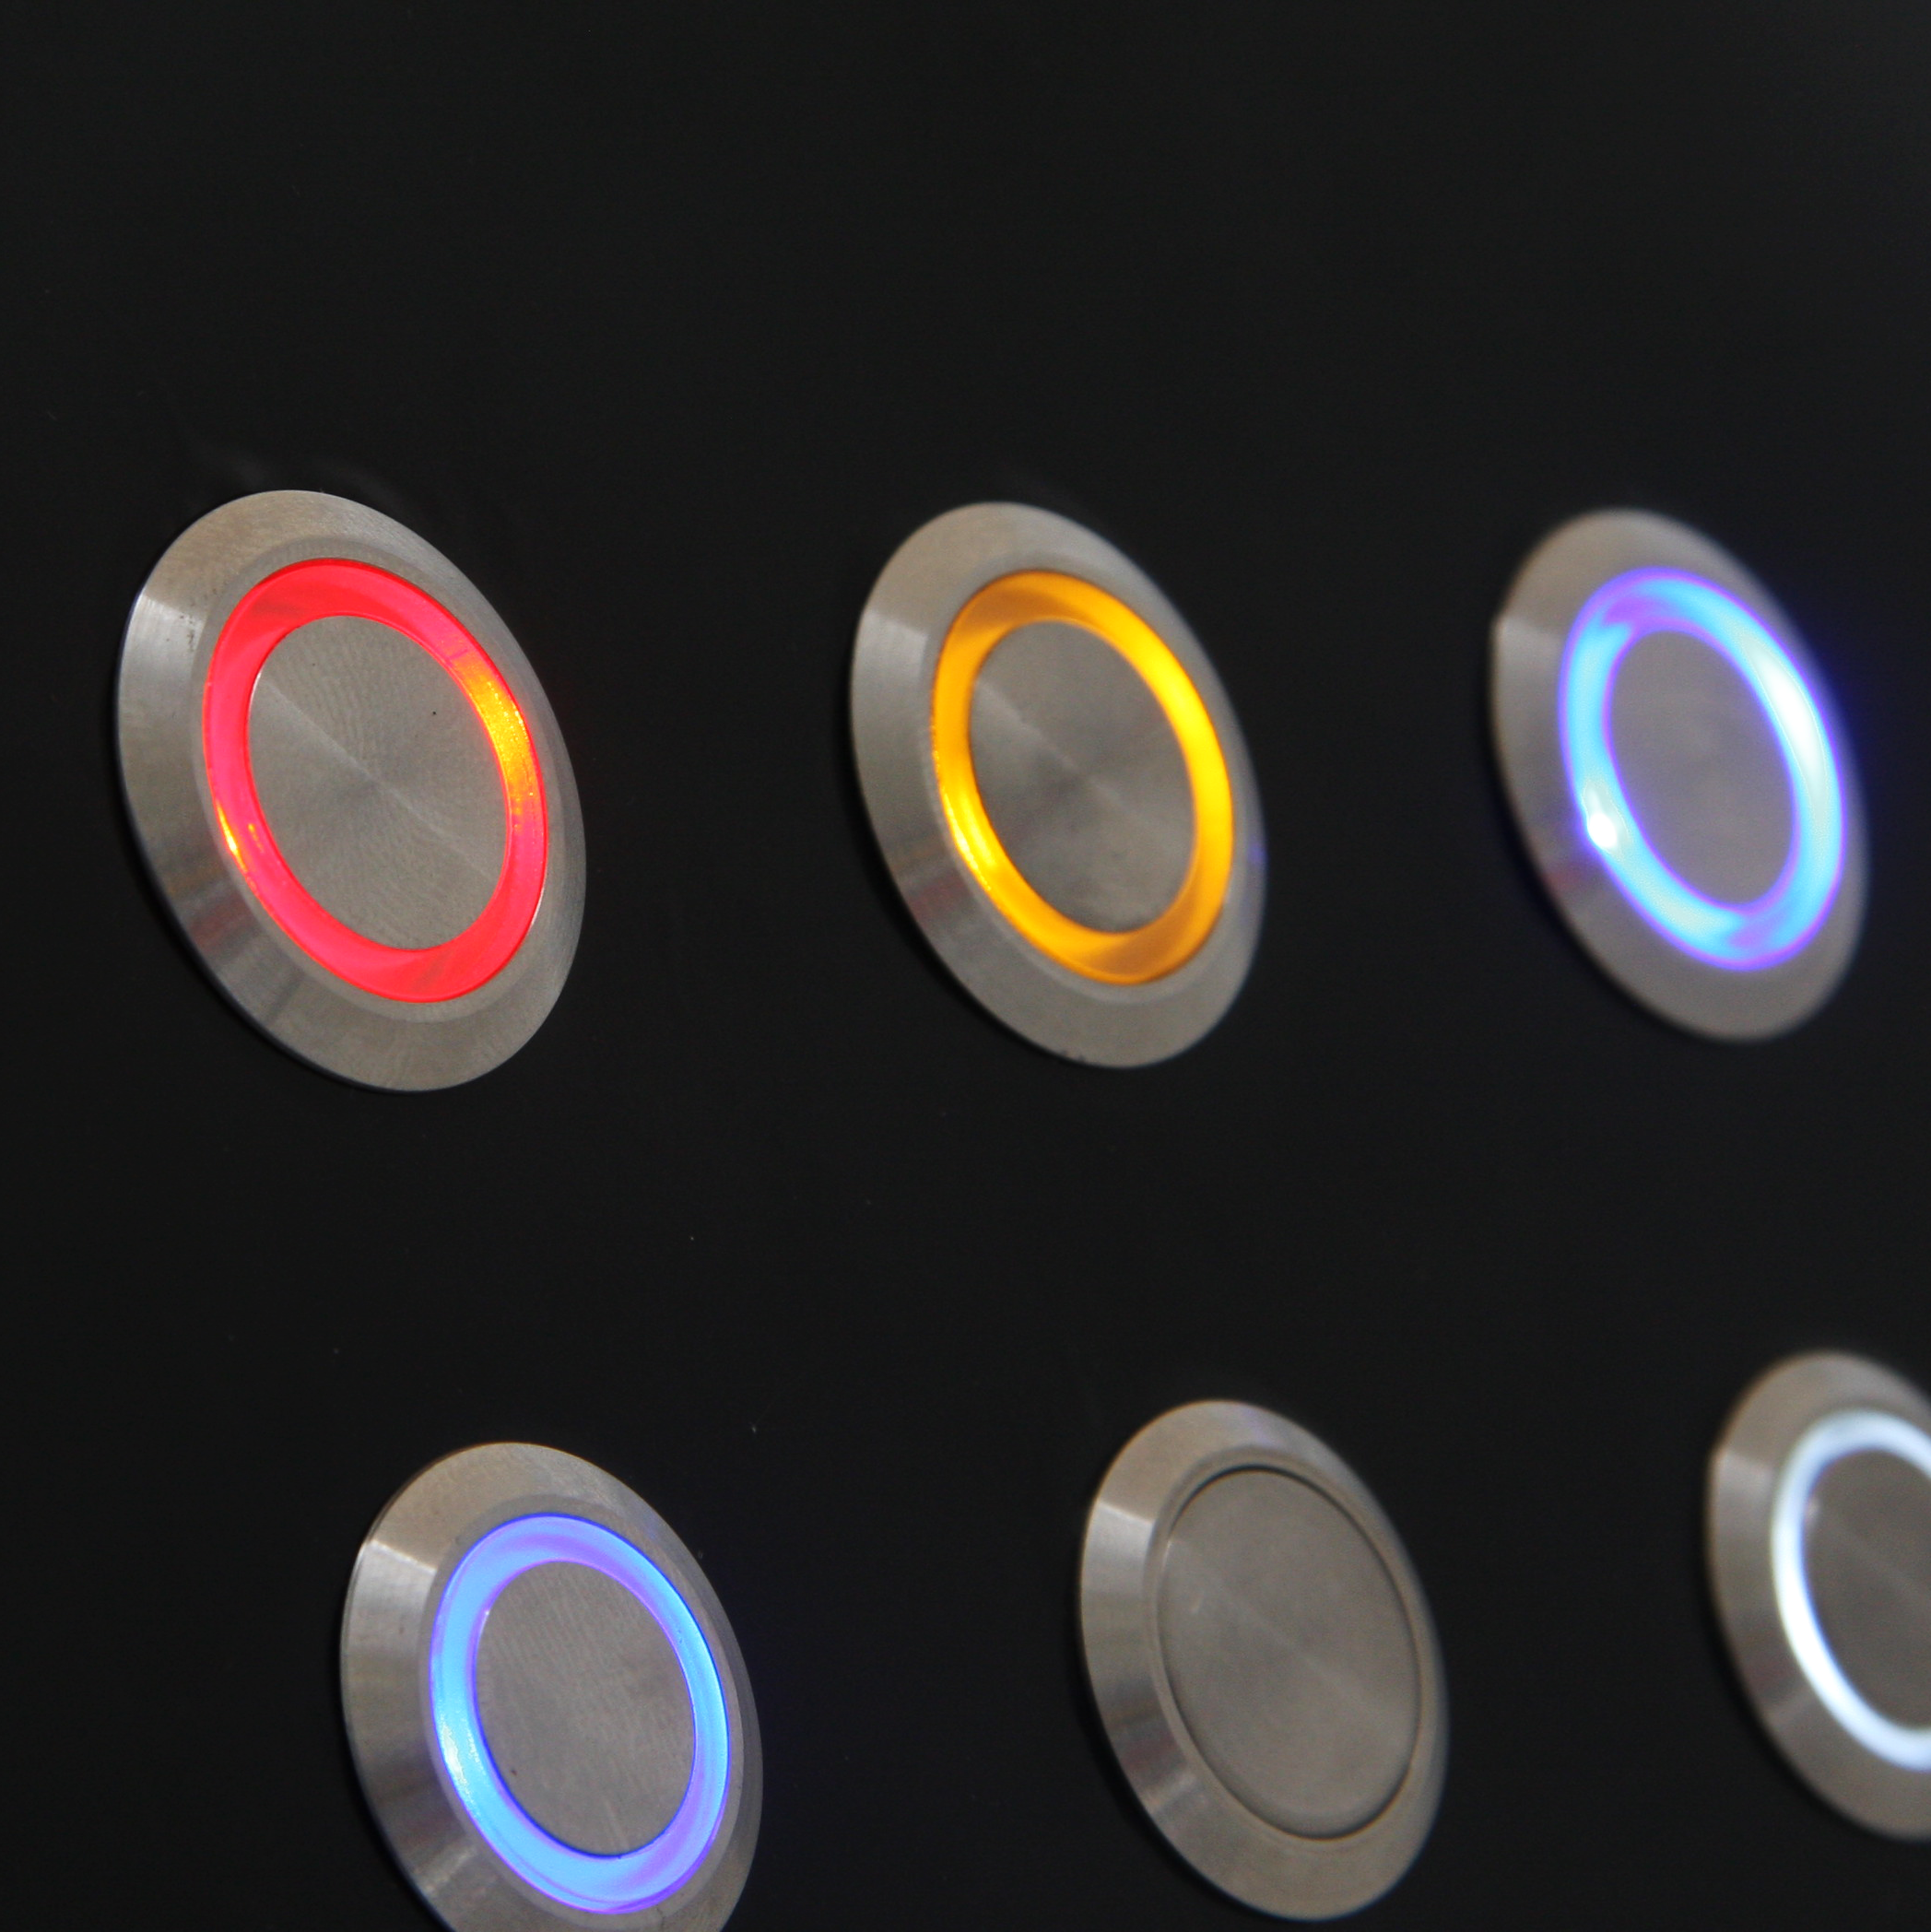 Illuminated Billet Buttons Installed